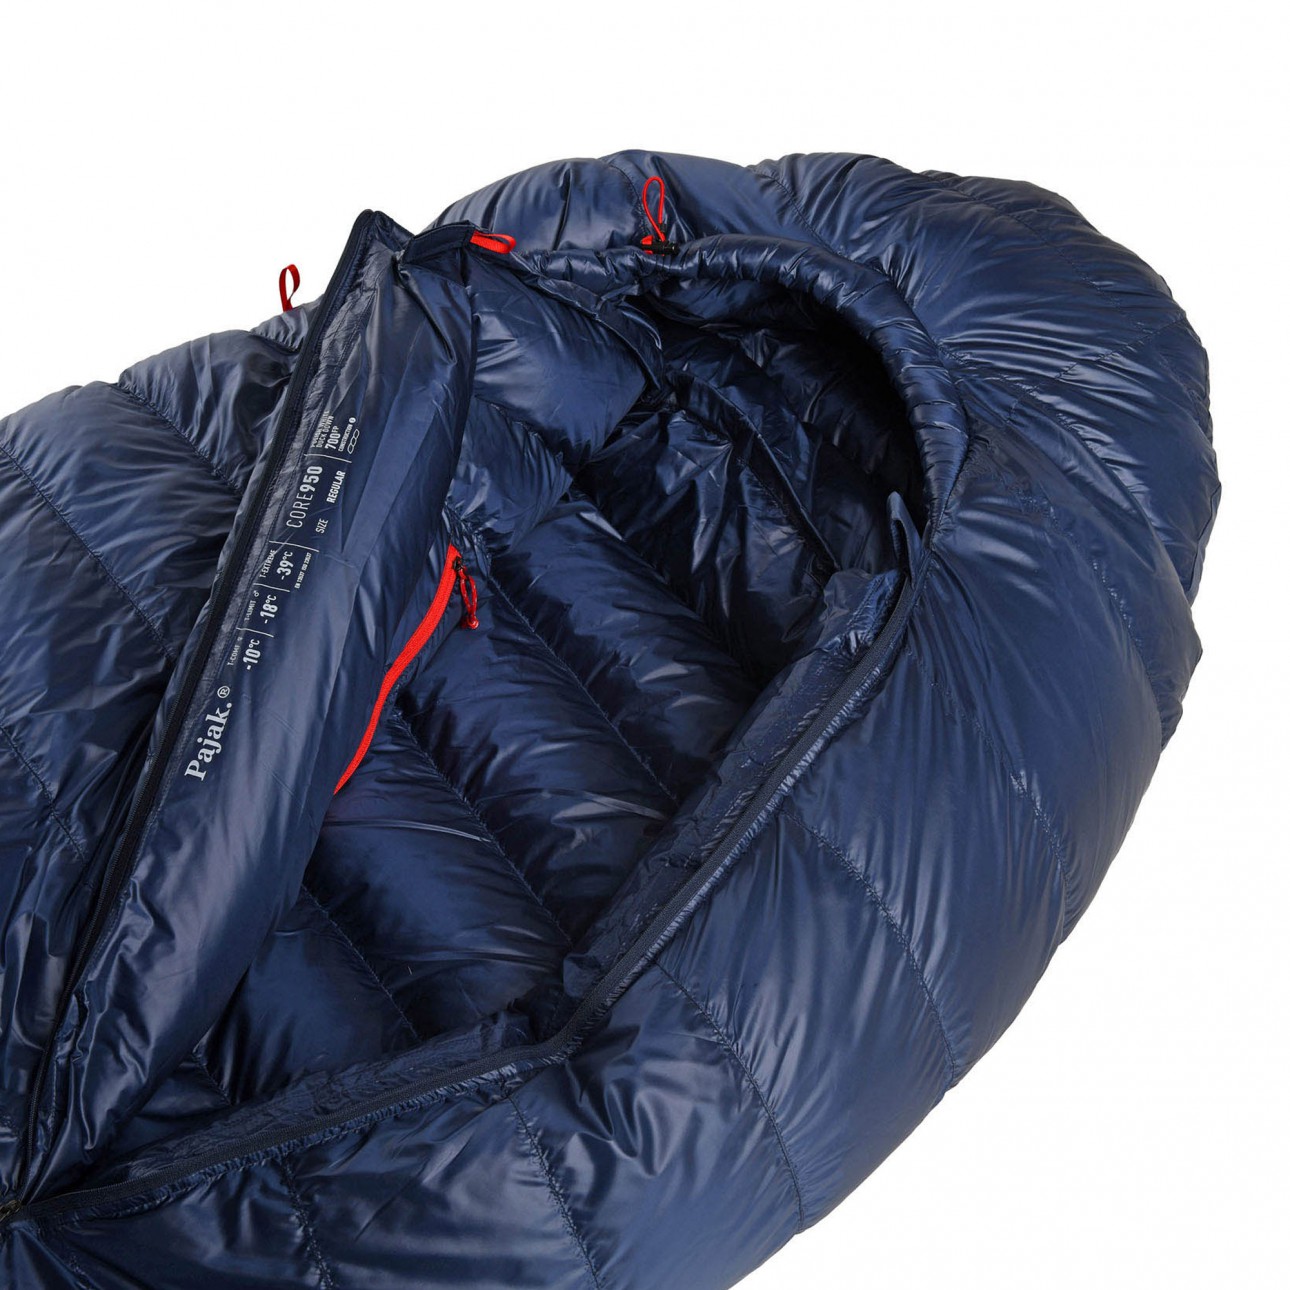 CORE 950 Winter Sleeping Bag